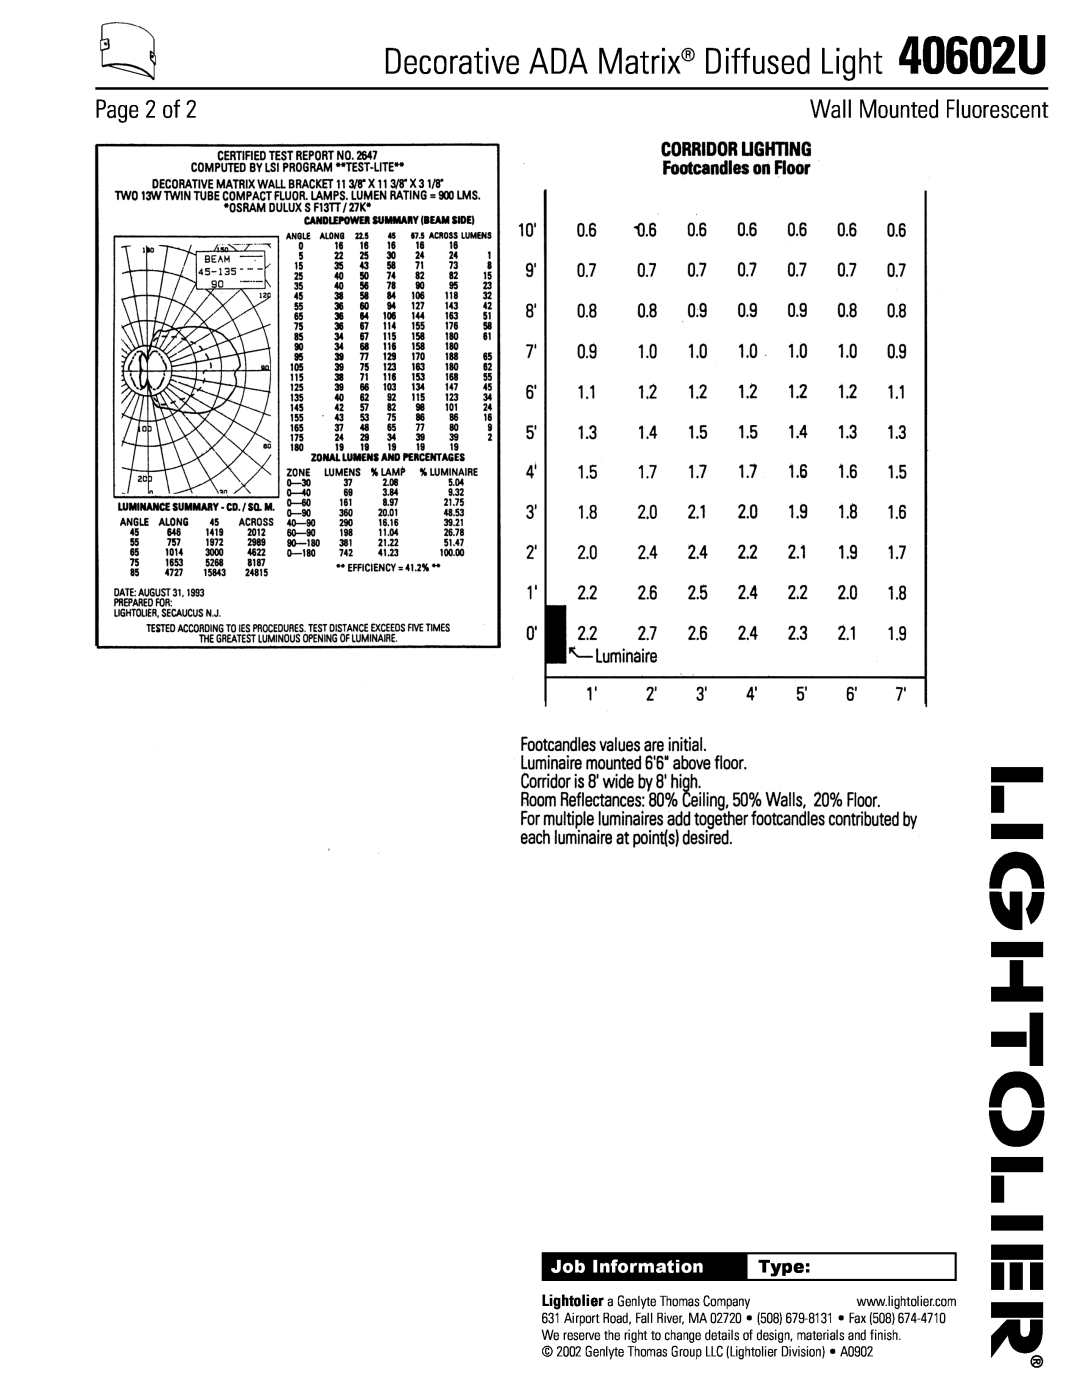 Lightolier Page 2 of, Type, Decorative ADA Matrix Diffused Light 40602U, Wall Mounted Fluorescent, Job Information 